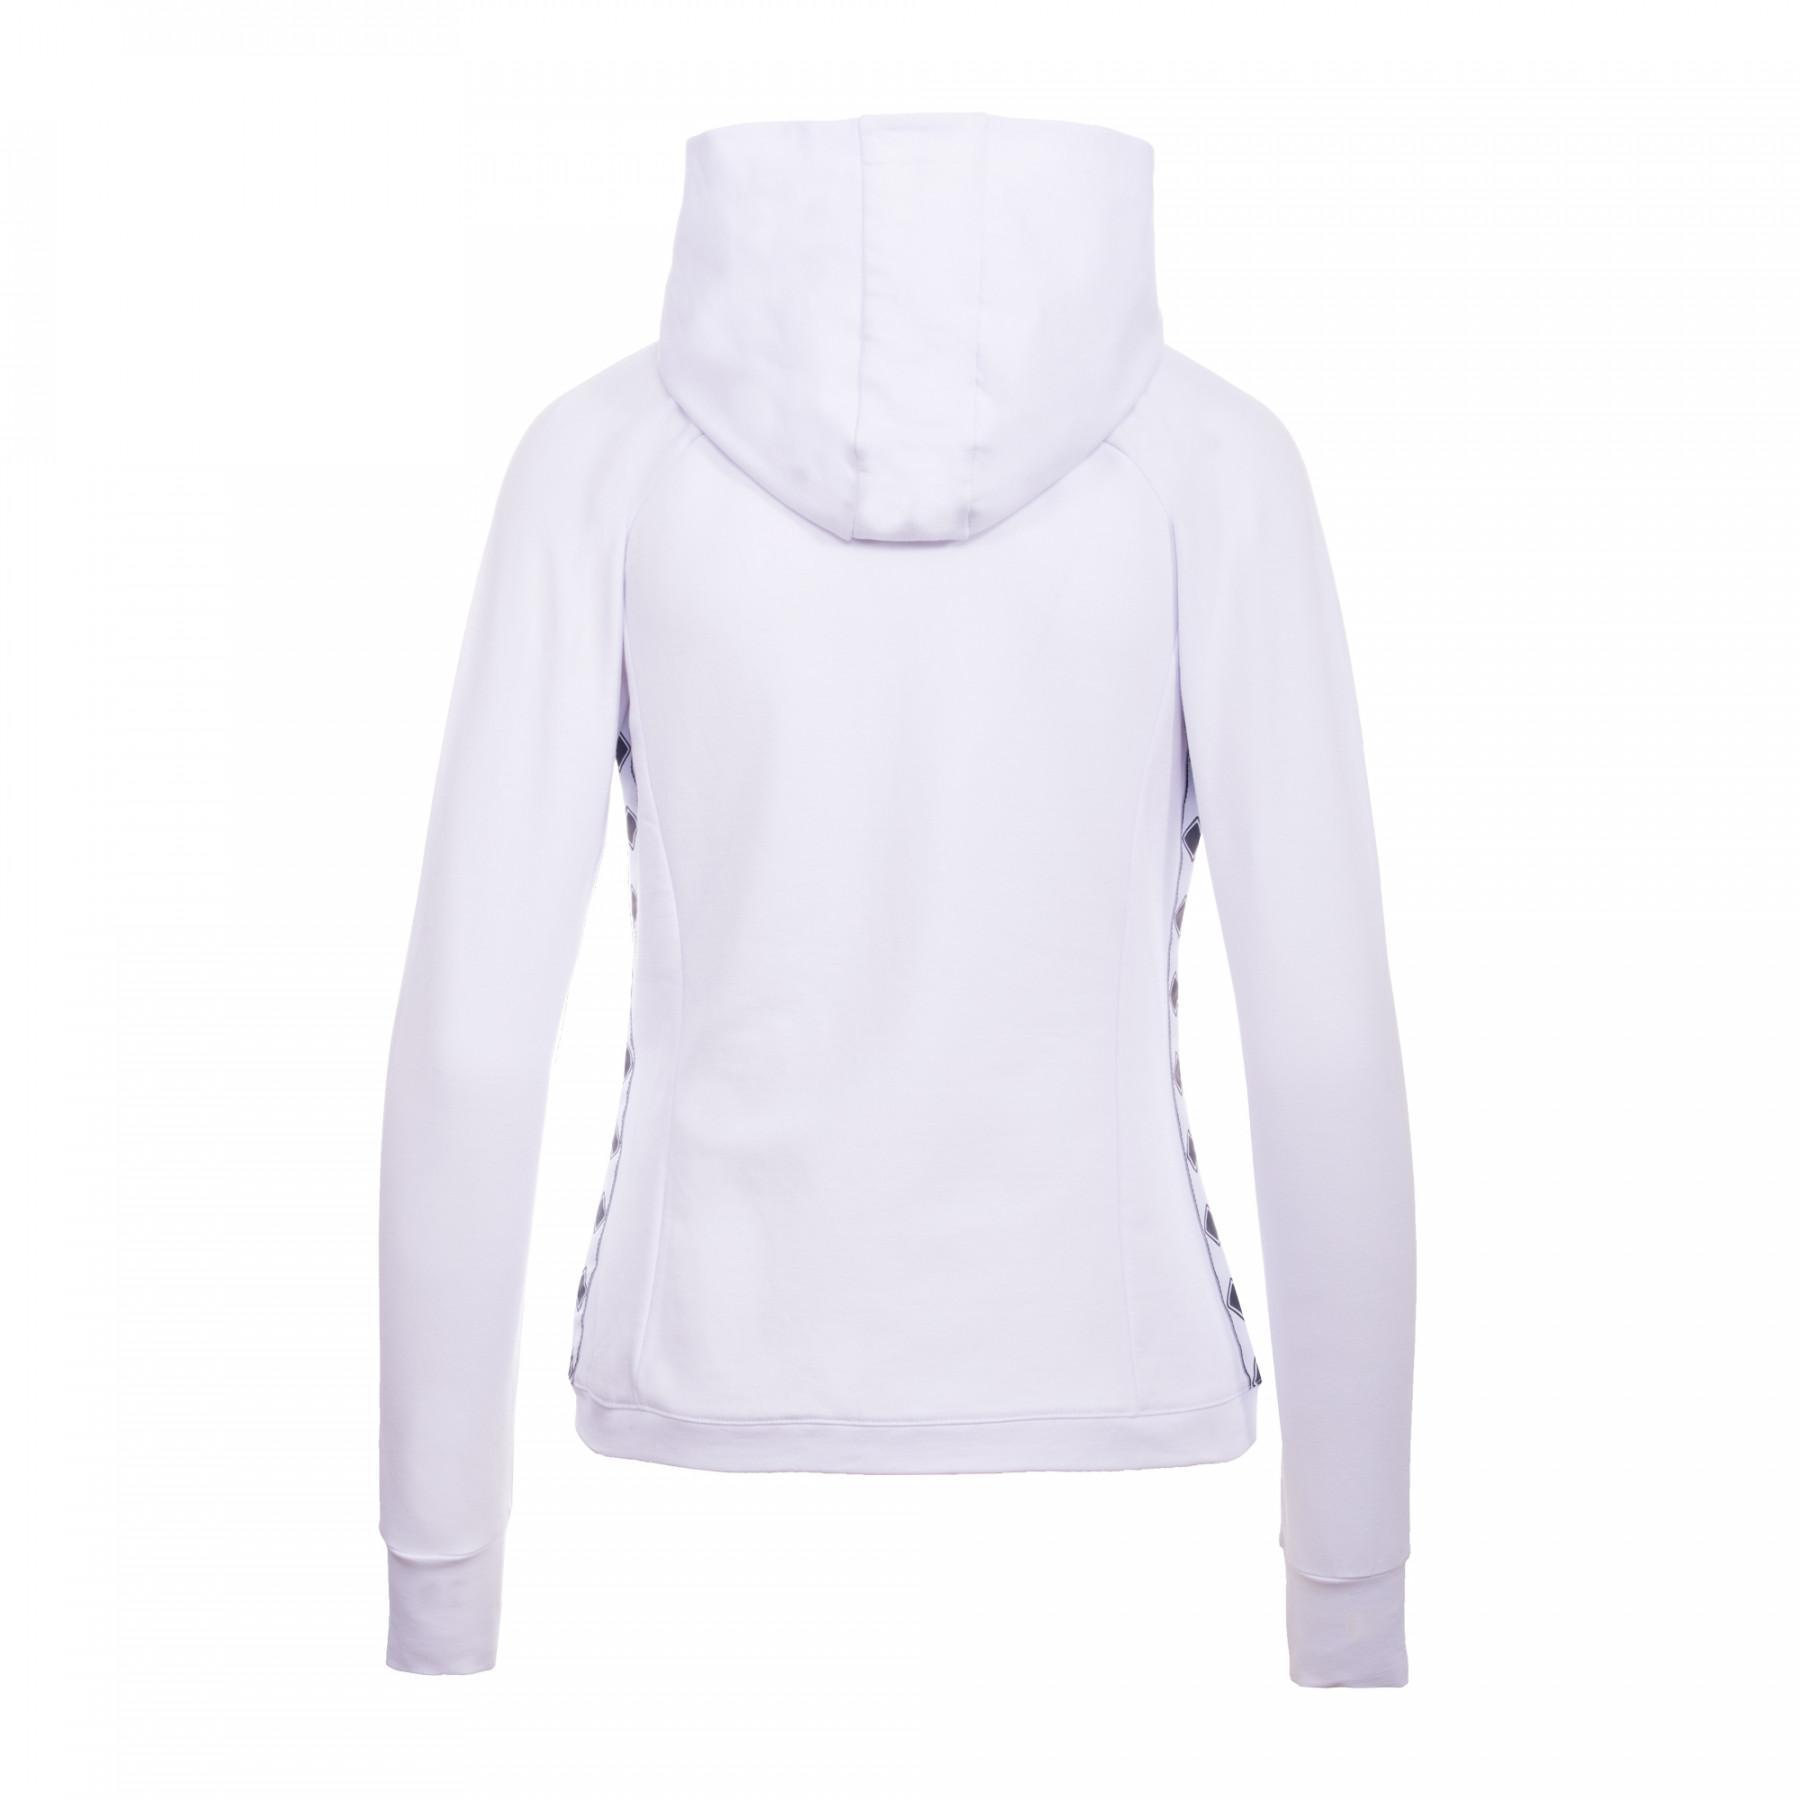 Sweatshirt girl Errea essential logo fleece